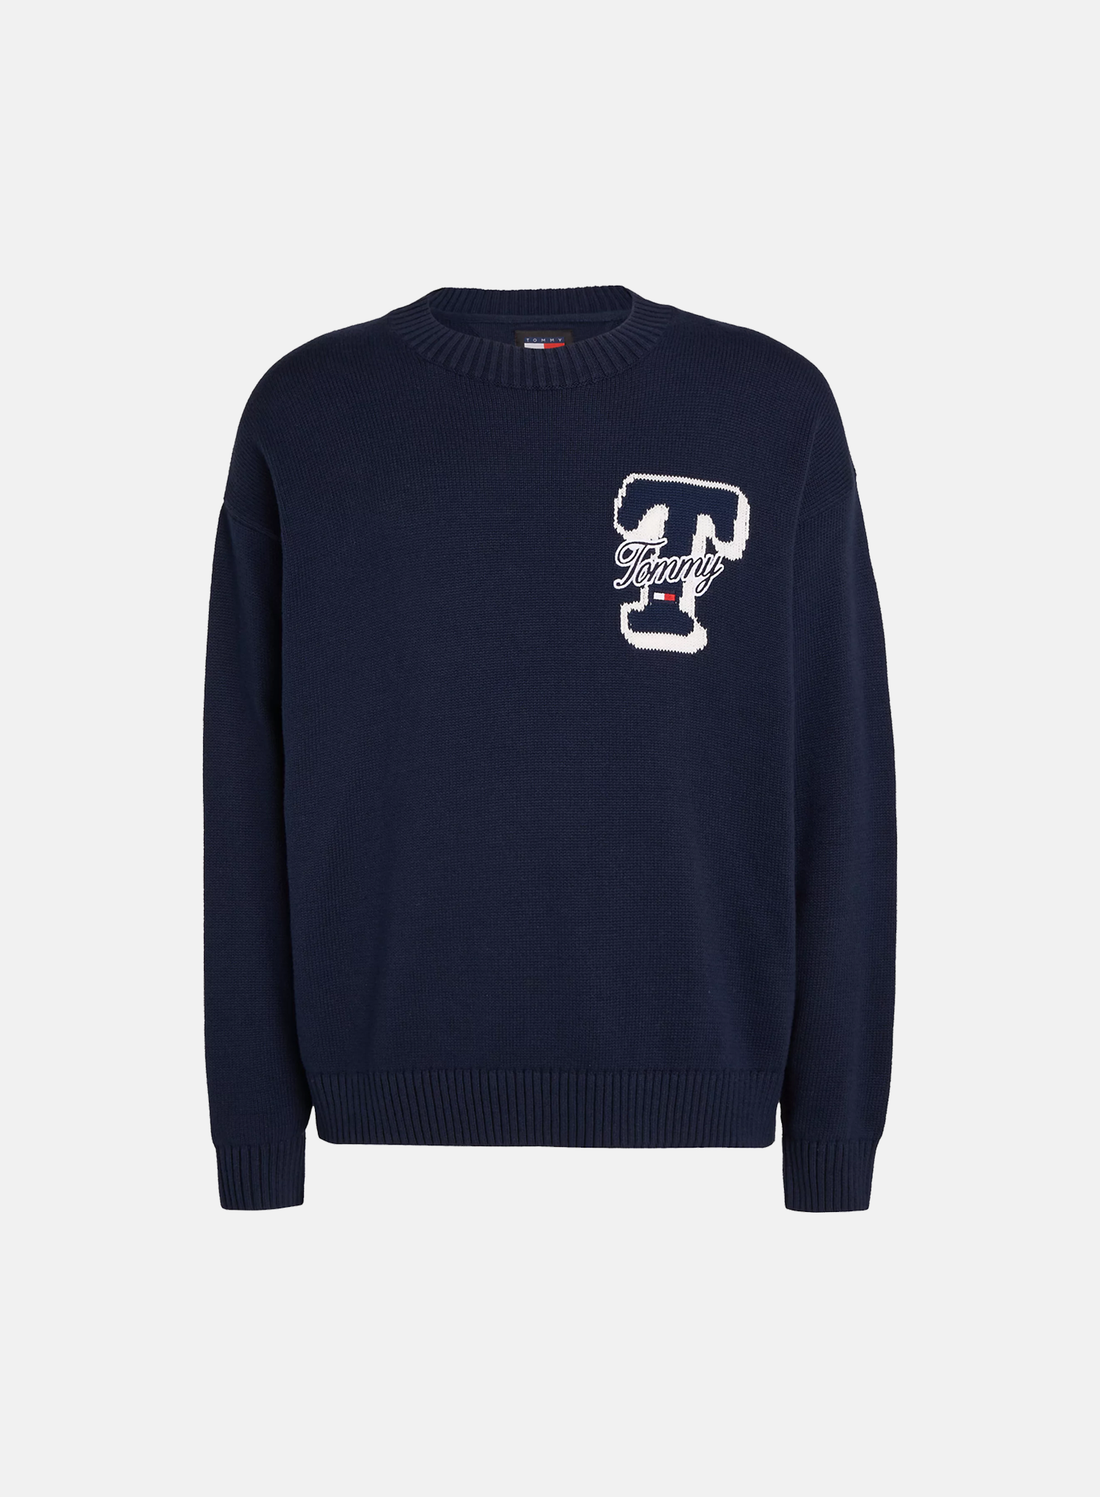 Tommy Jeans Single Letter Sweater Navy - Hympala Store 